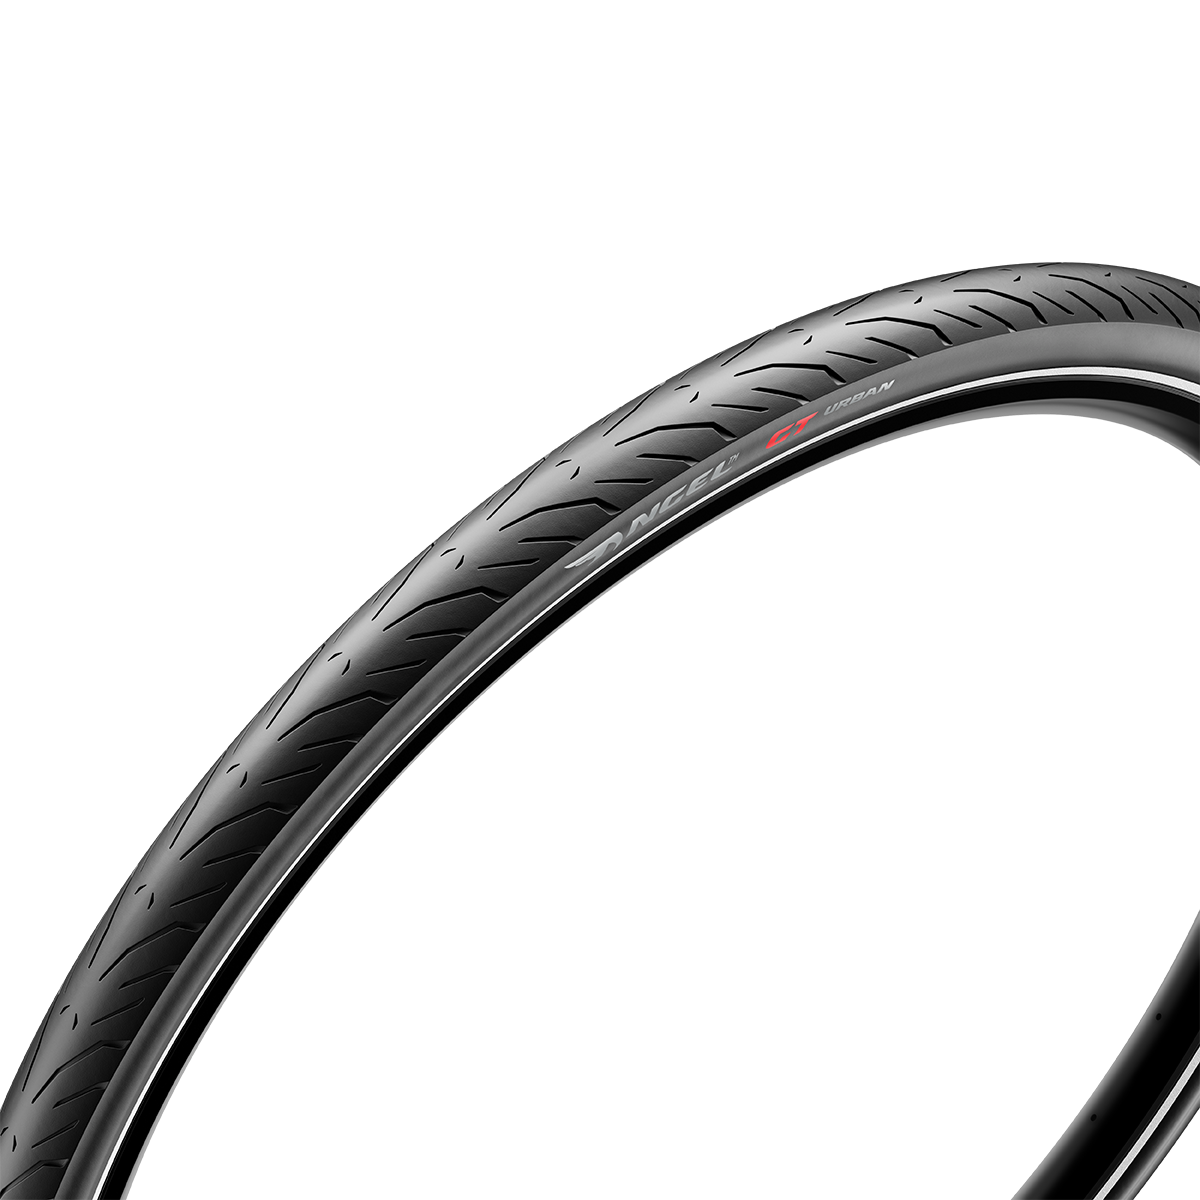 Plášť Pirelli Angel™ GT Urban, 37 - 622, HyperBELT 5mm, 60 tpi, Pro (urban), Black w/refle